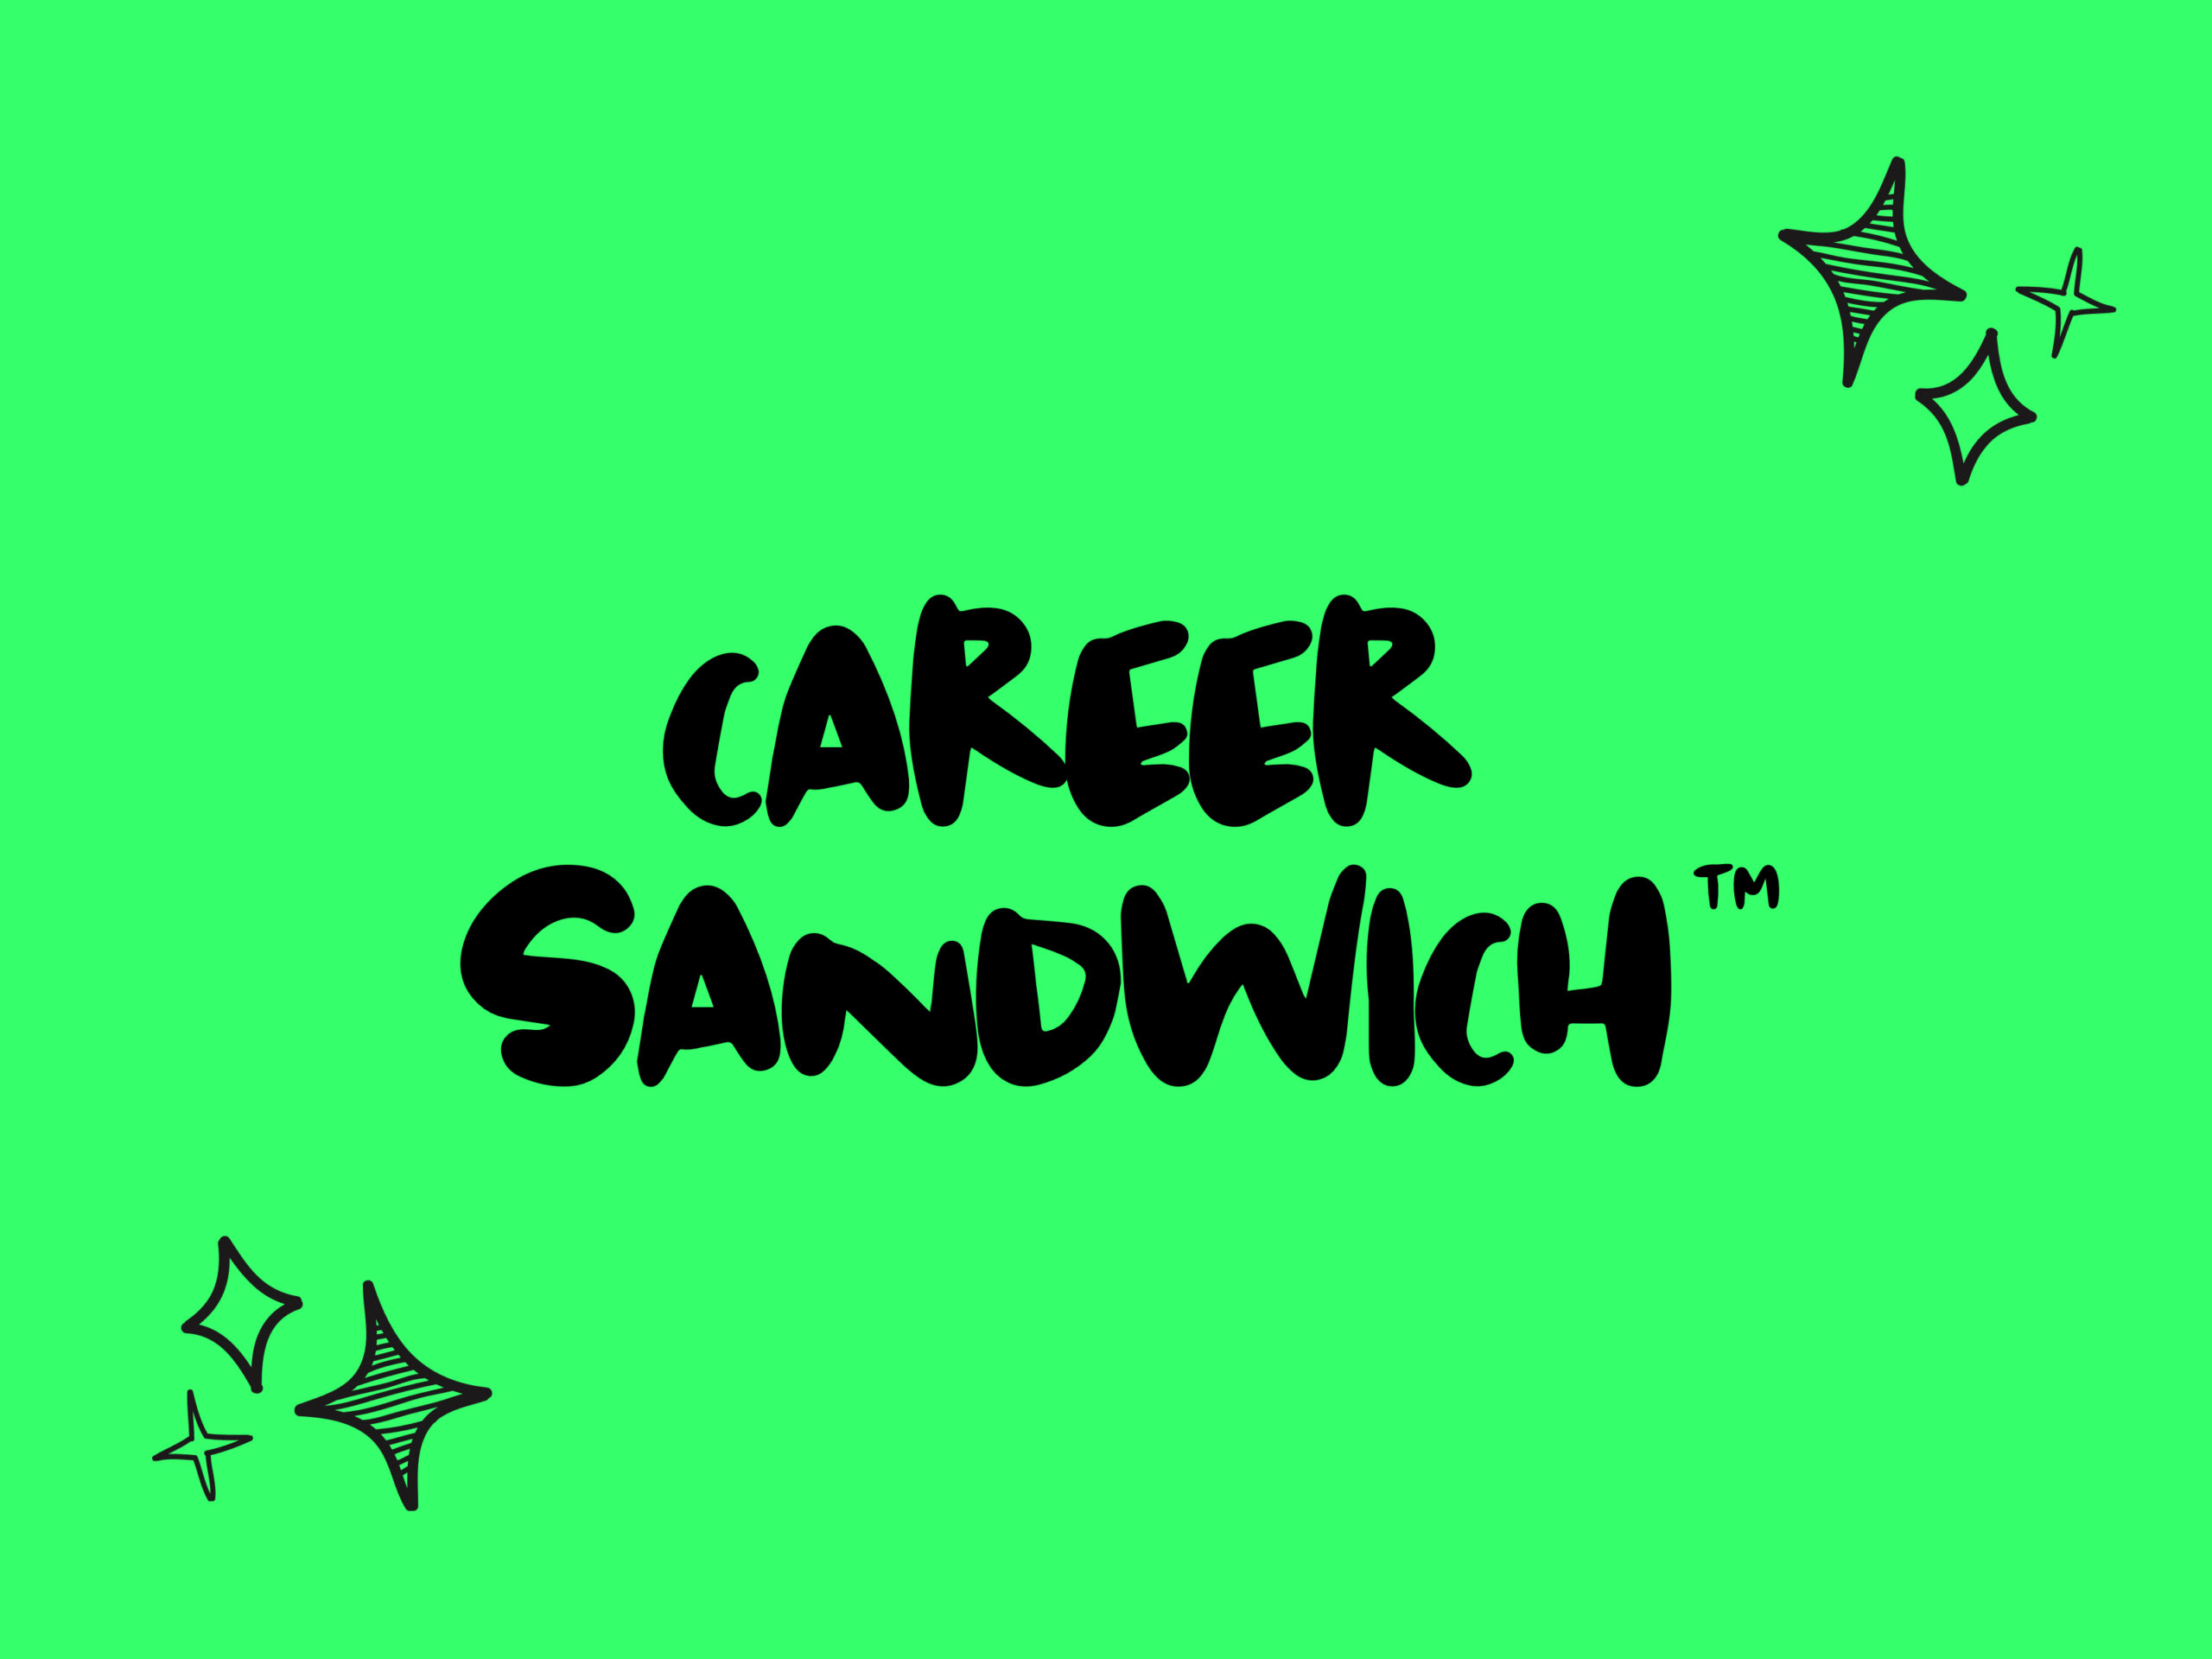 Career Sandwich Image 